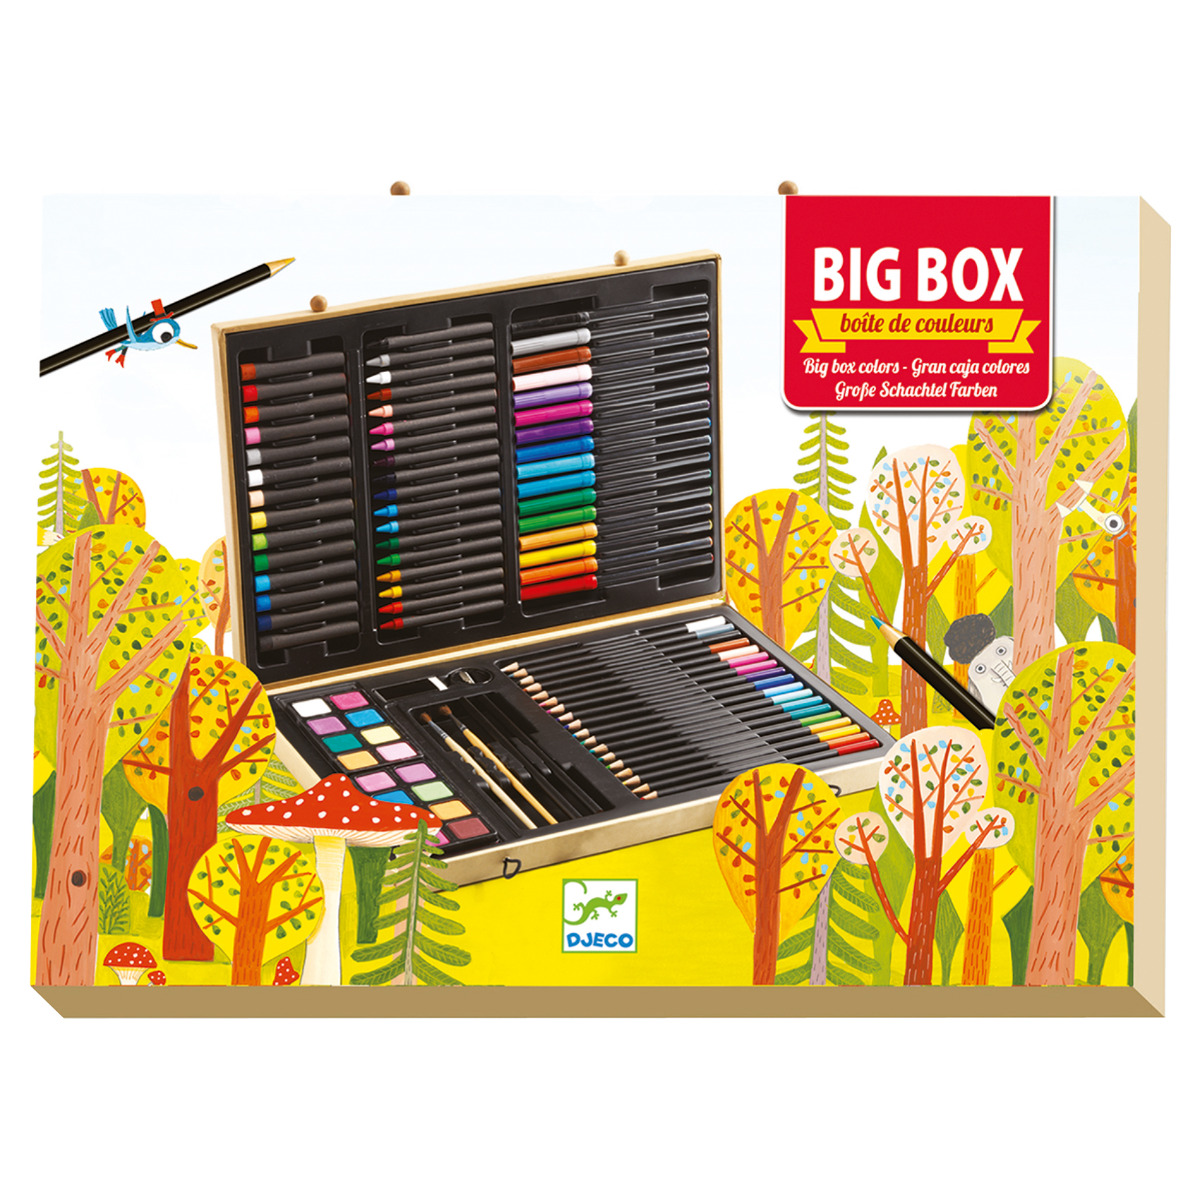 Big box of colours *